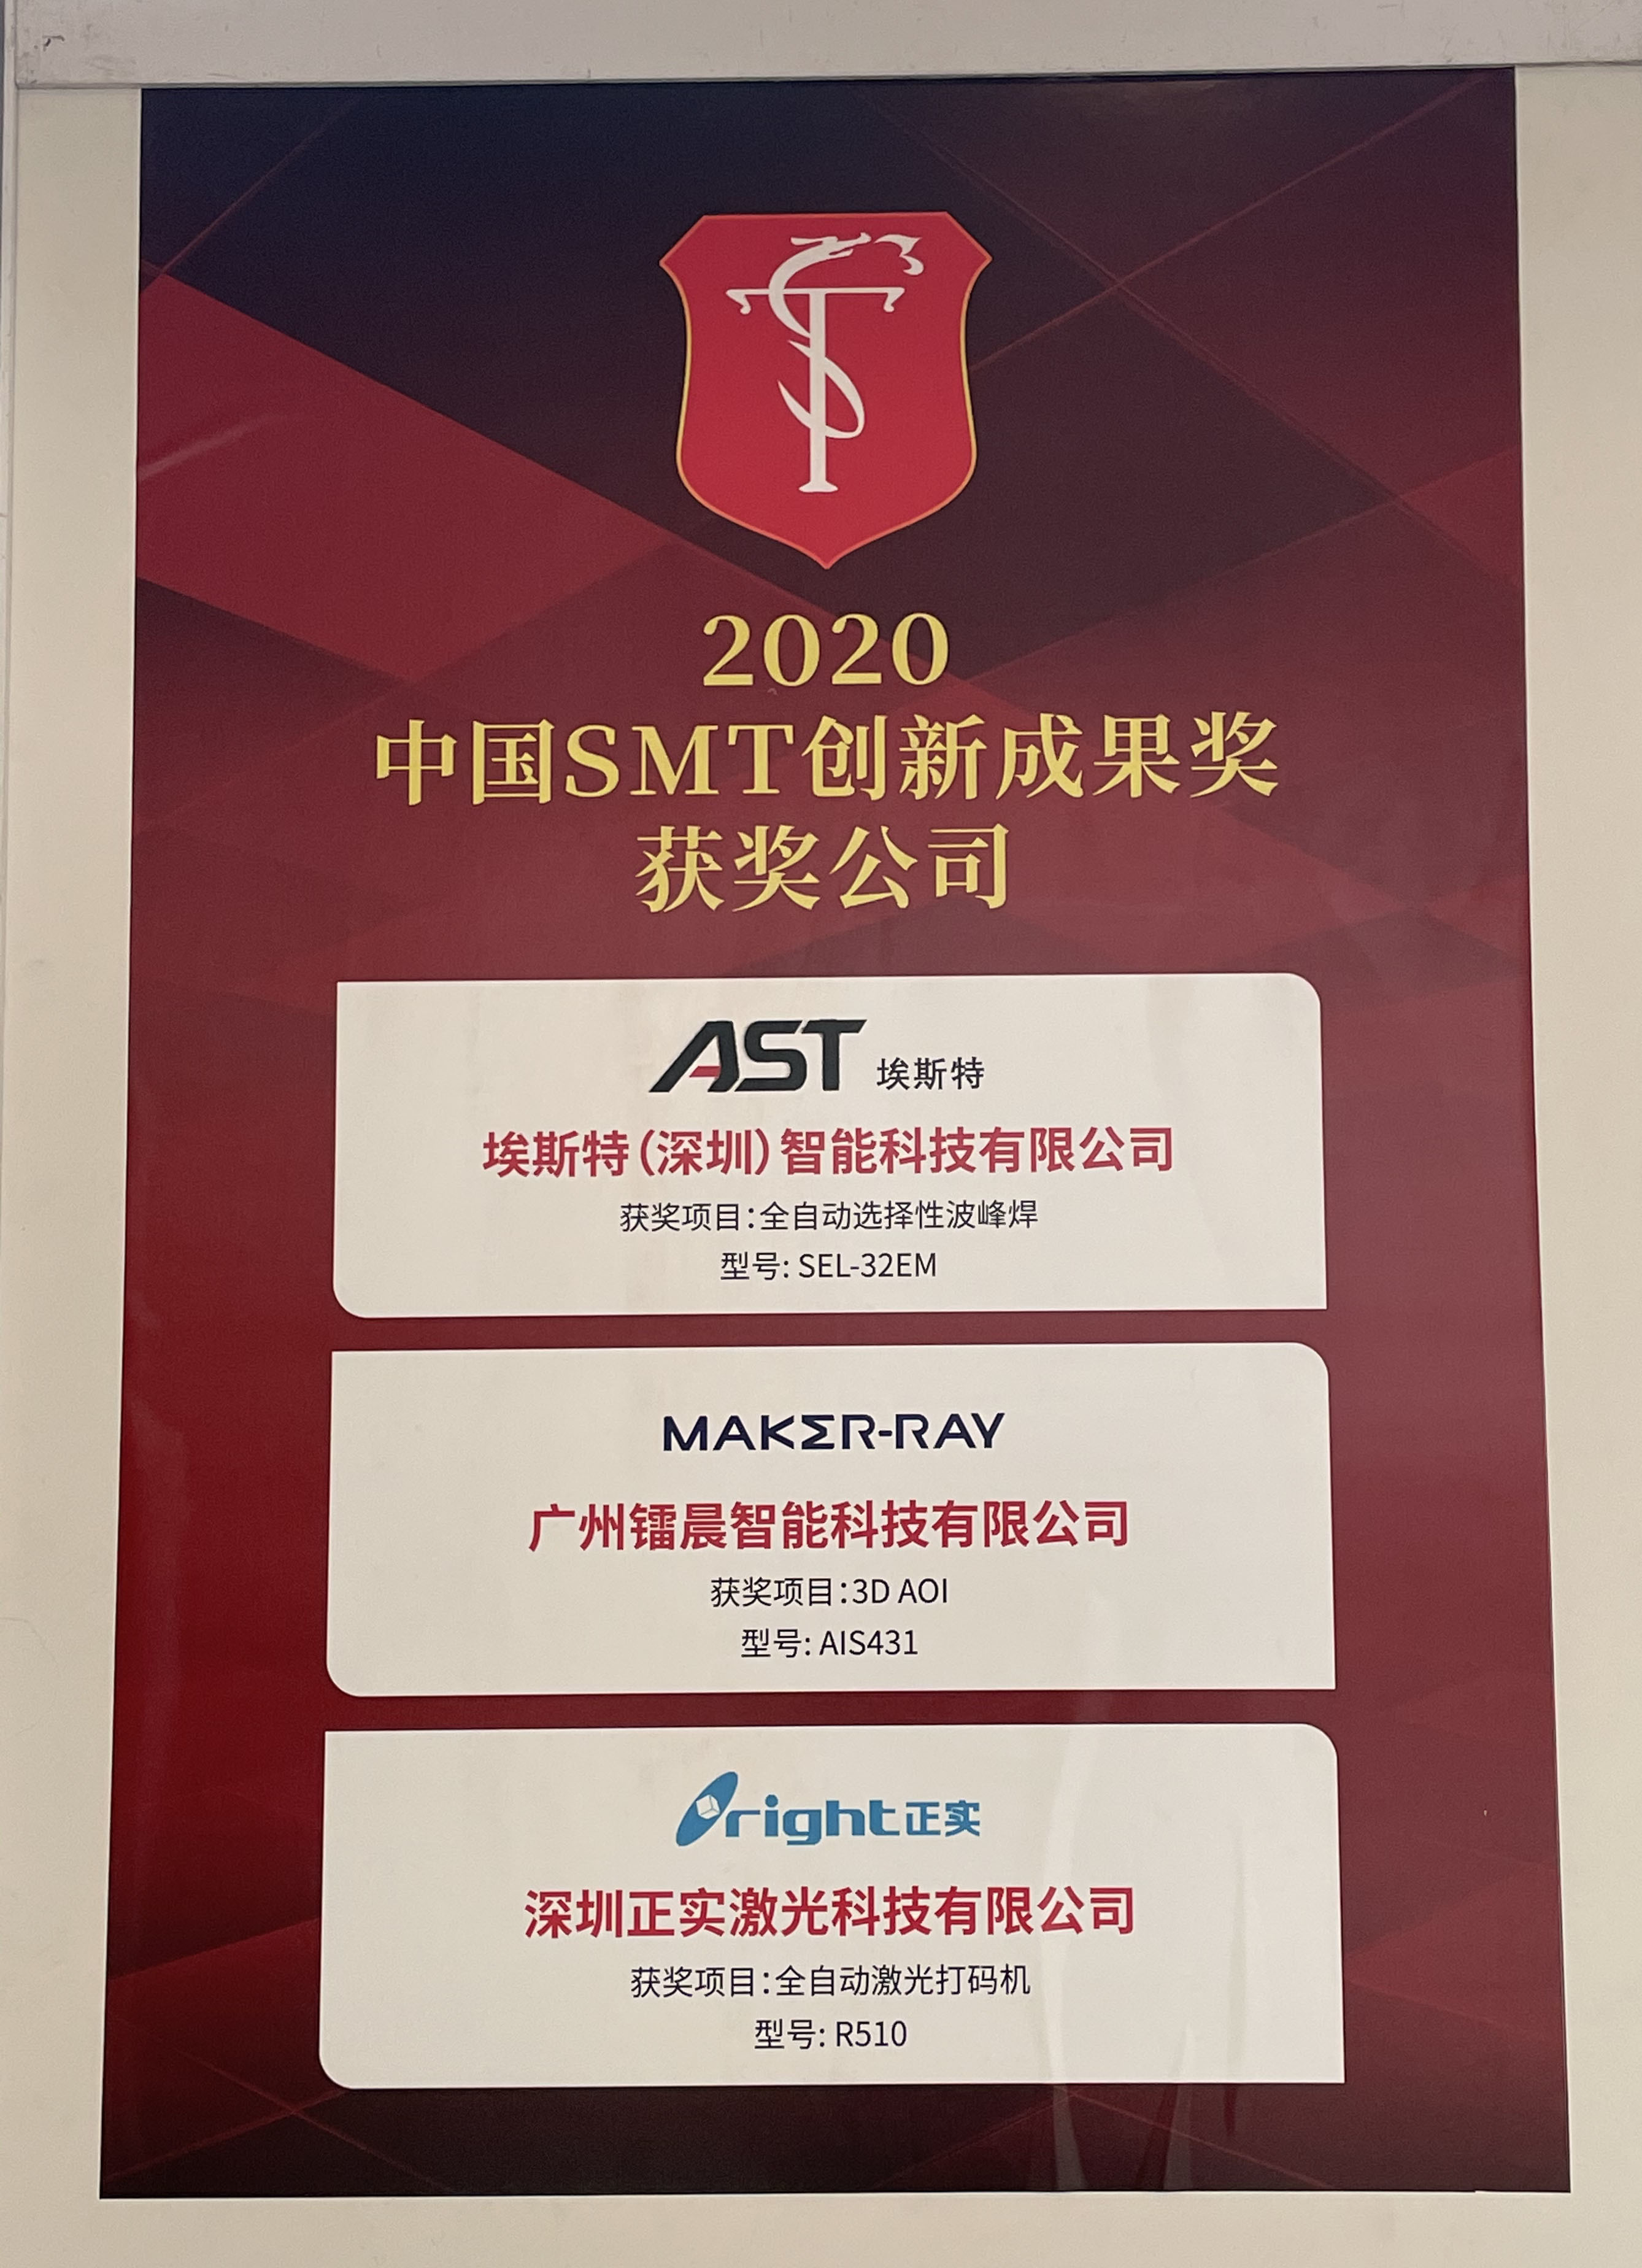 2020SMT创新成果奖获奖公司